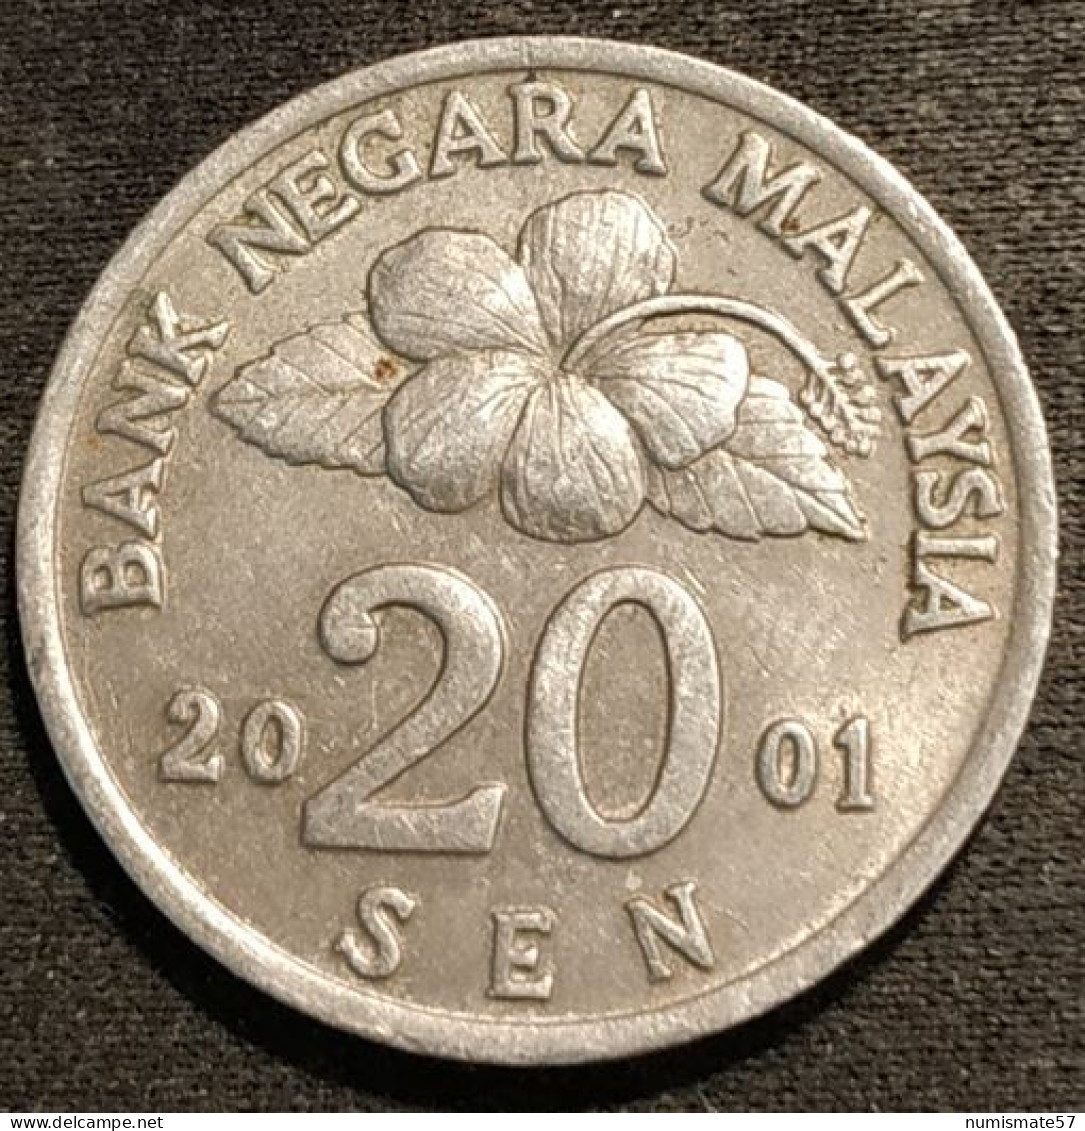 MALAISIE - 20 SEN 2001 - Agong - KM 52 - ( MALAYSIA ) - Malaysia